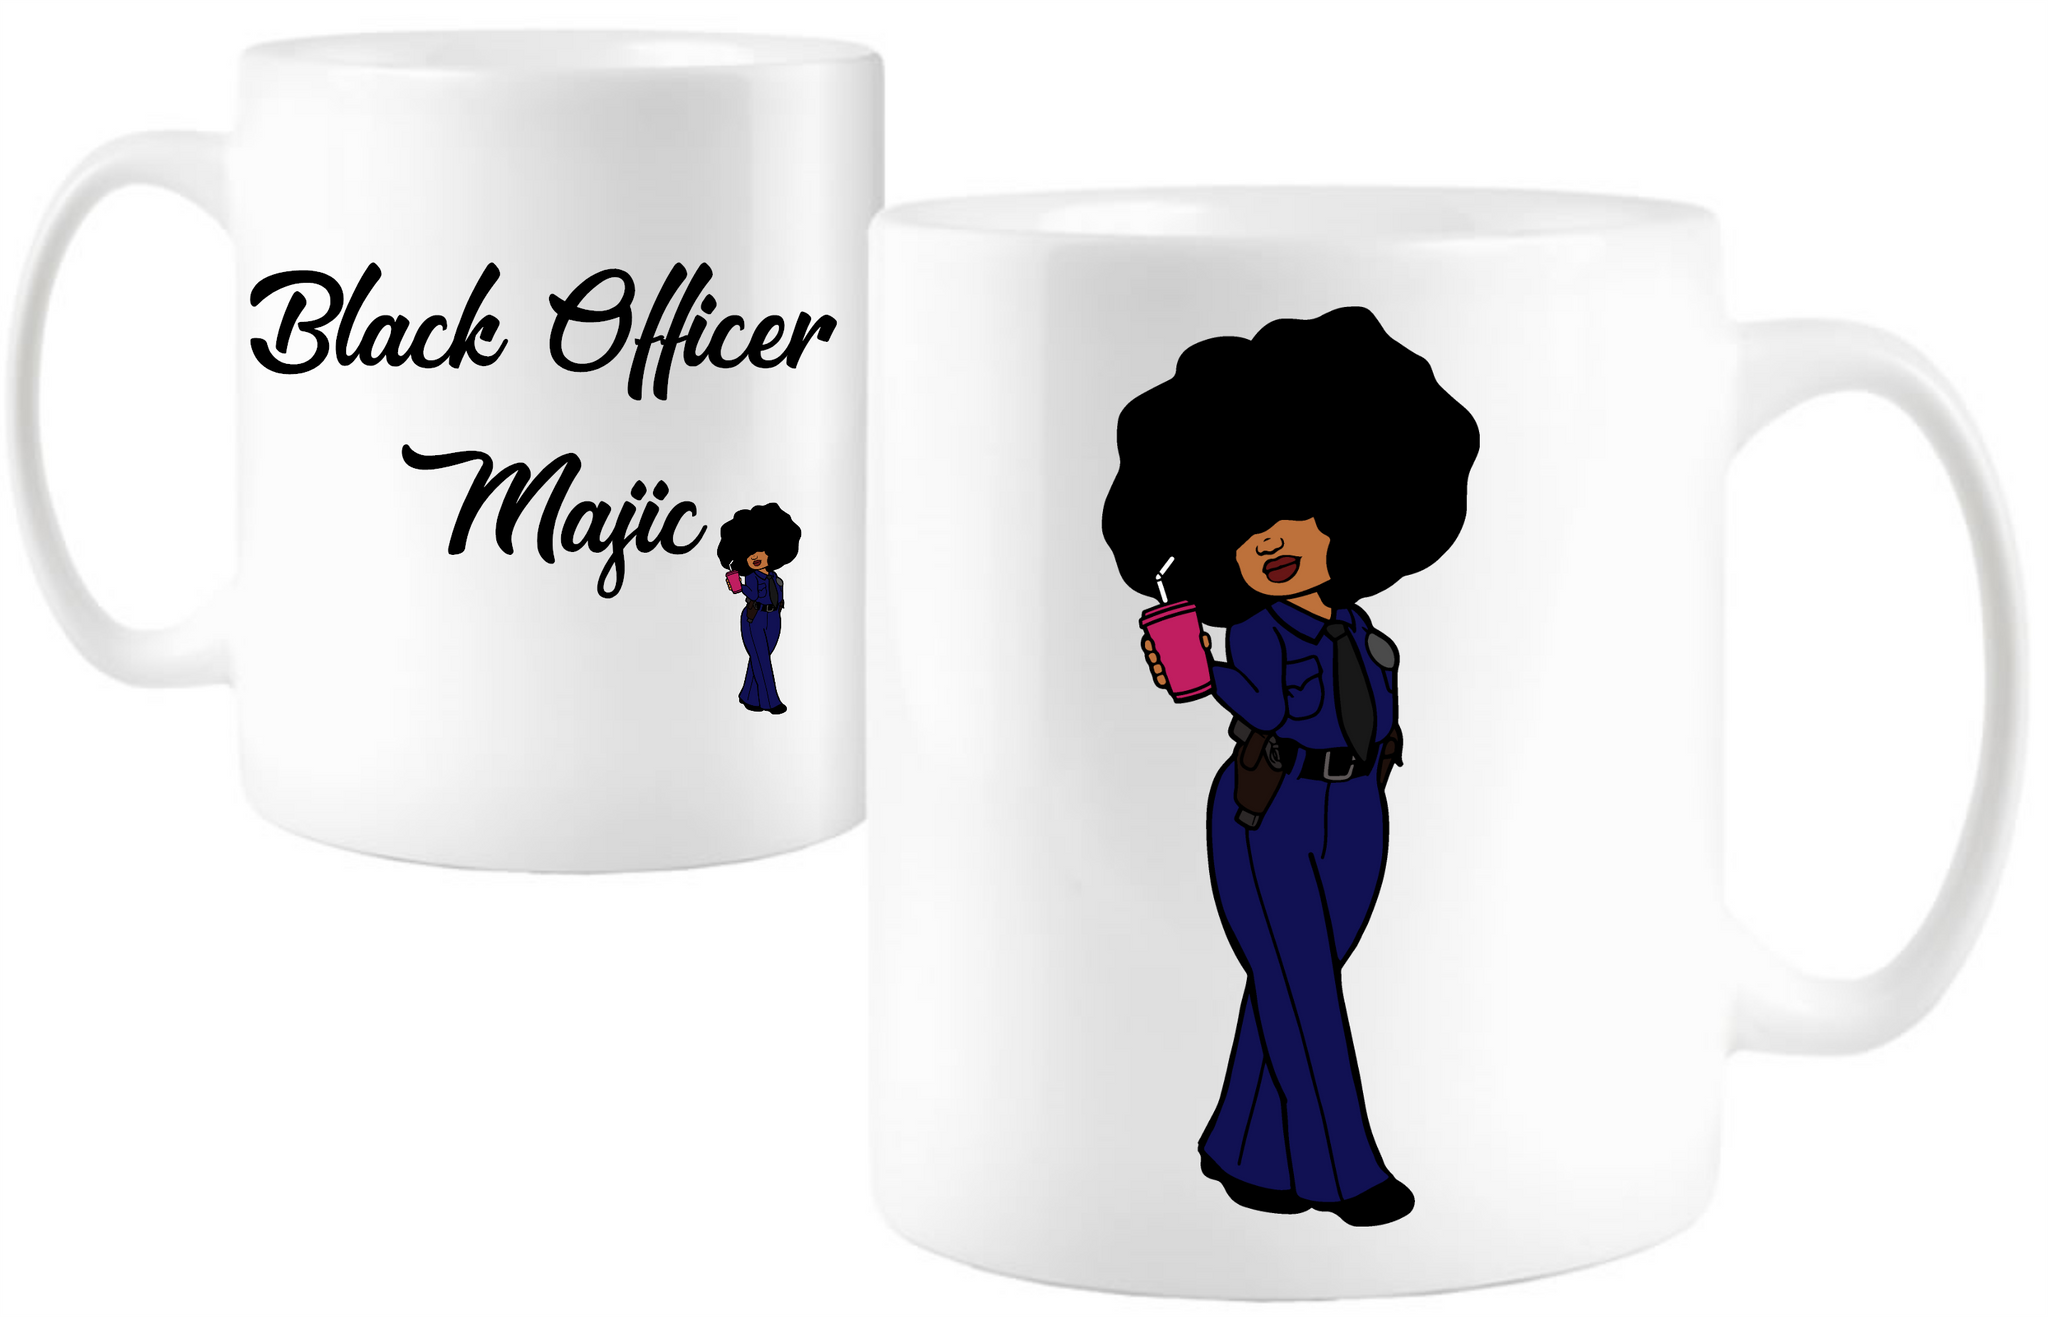 Black Officer Majic - Tee Size Me